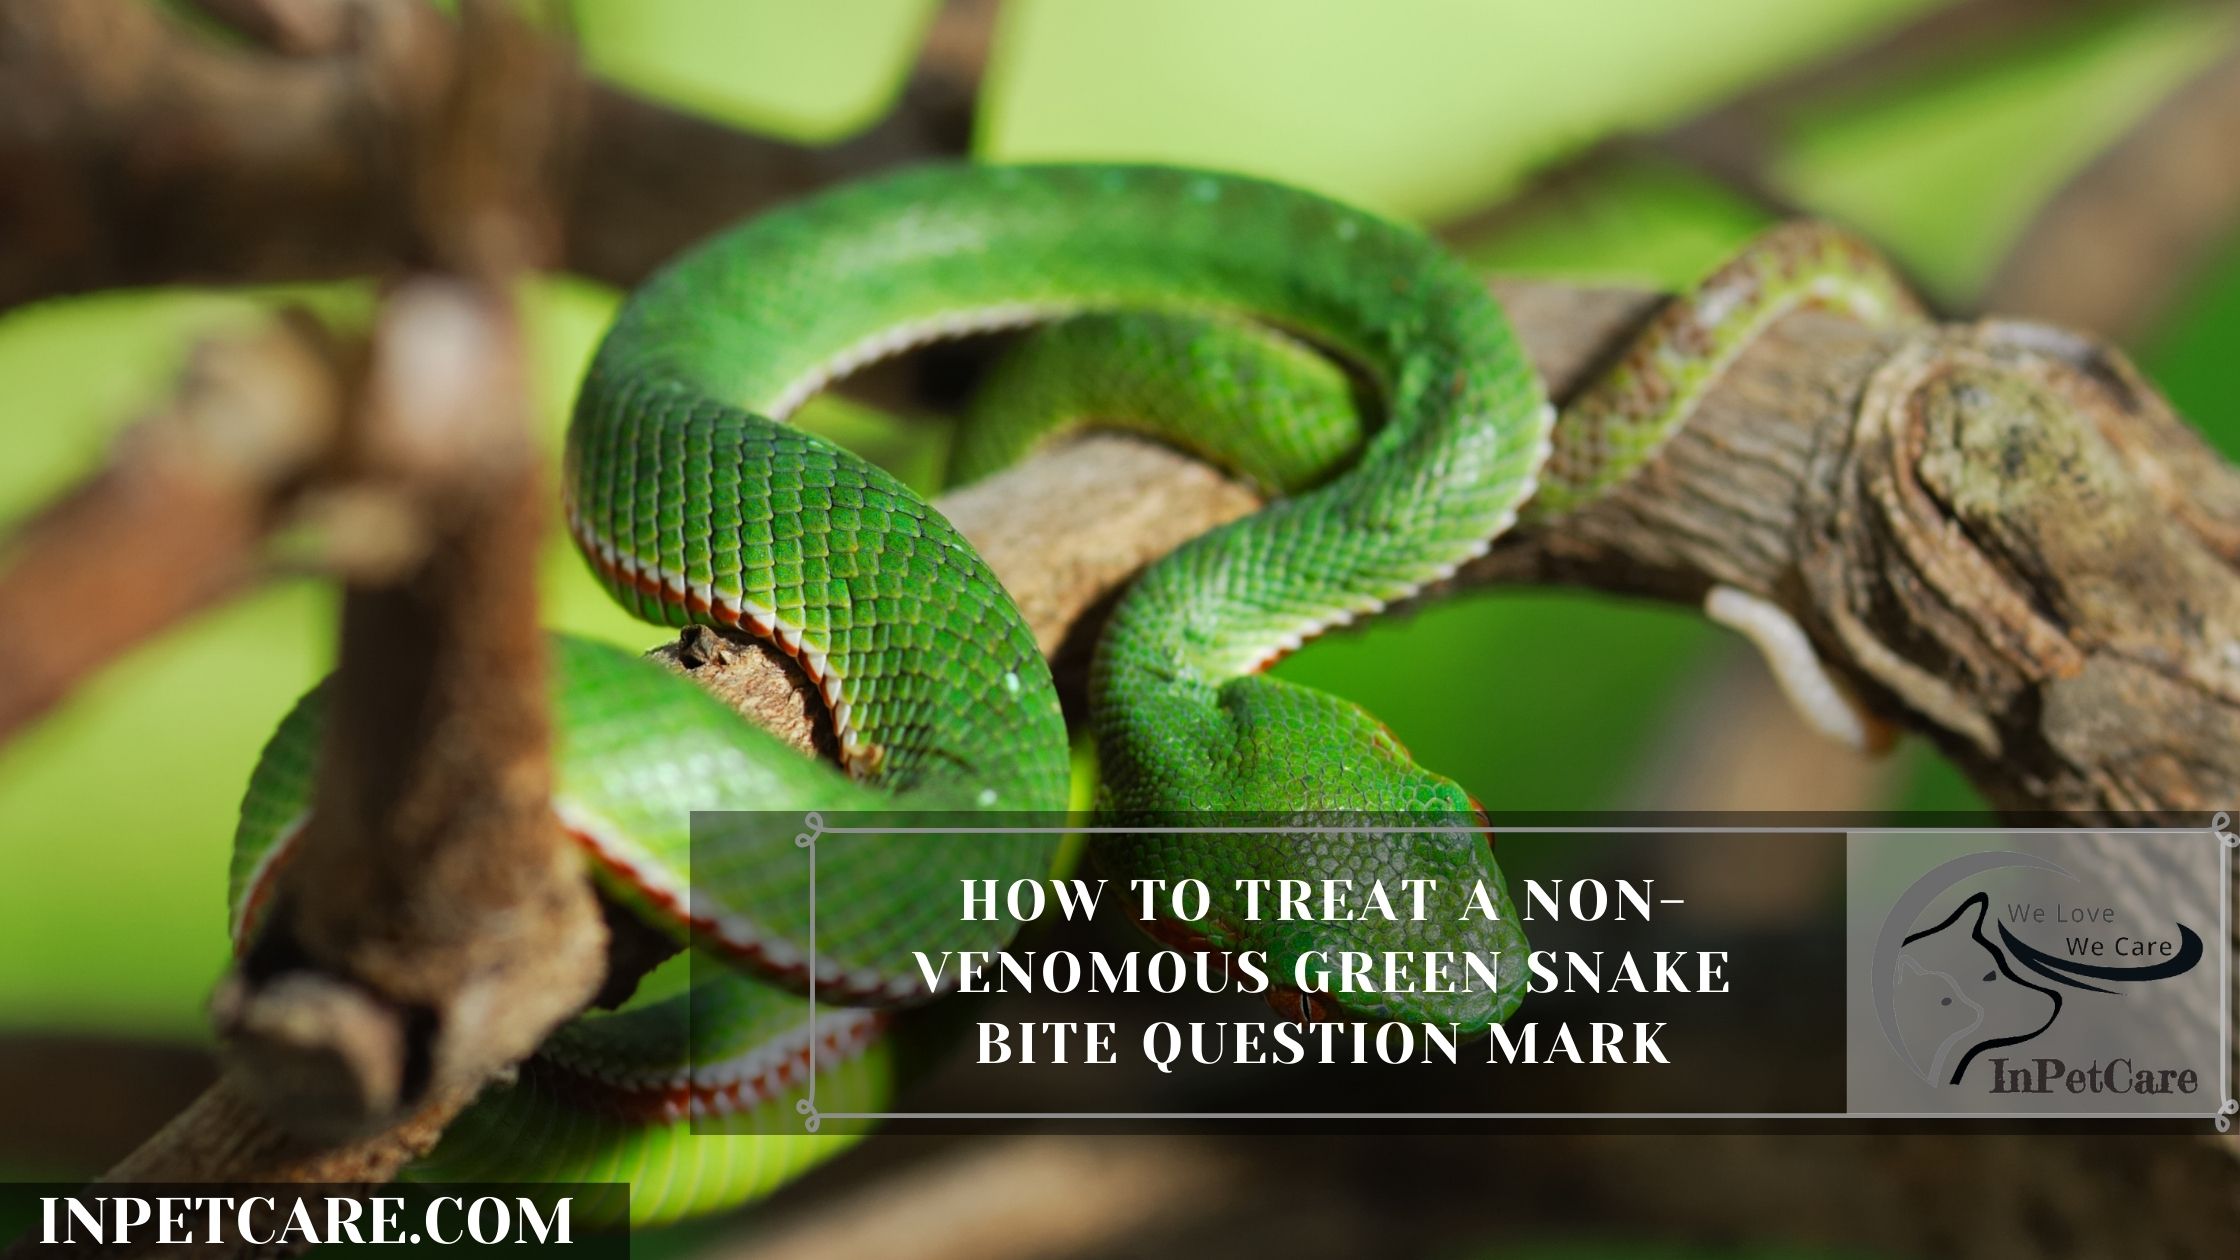 How to treat a non-venomous green snake bite question mark